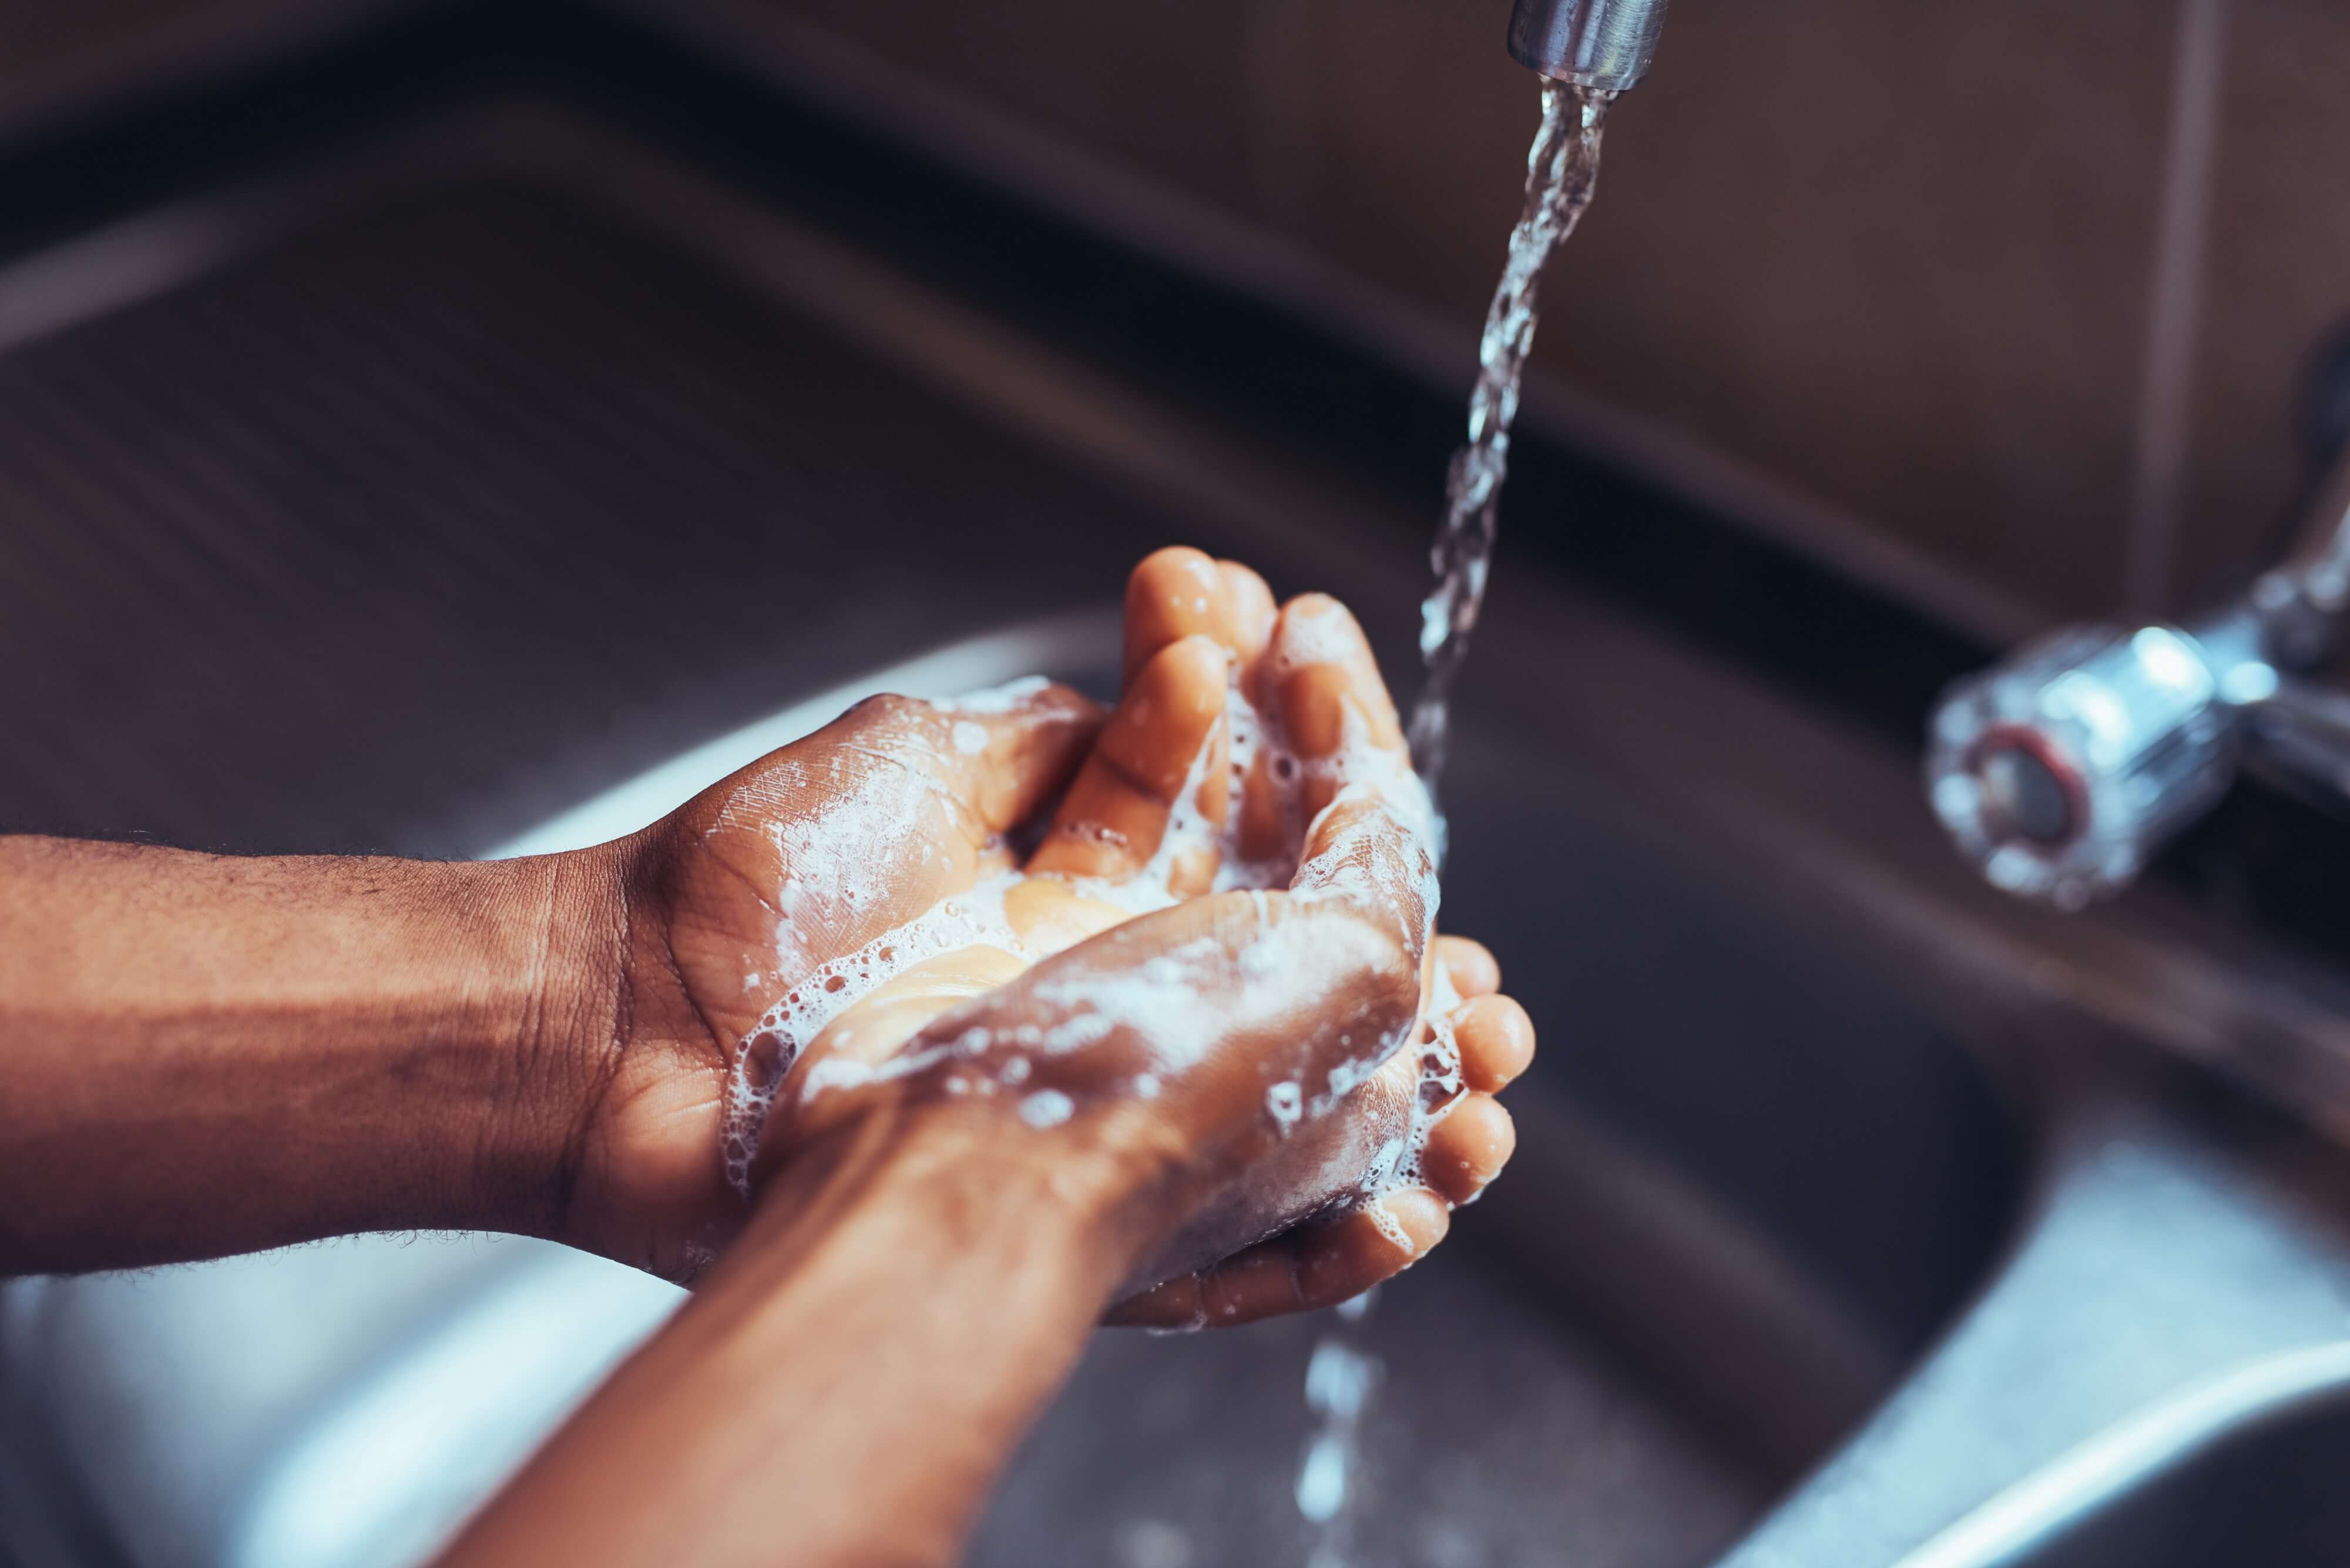 Handwashing helps to make decisions